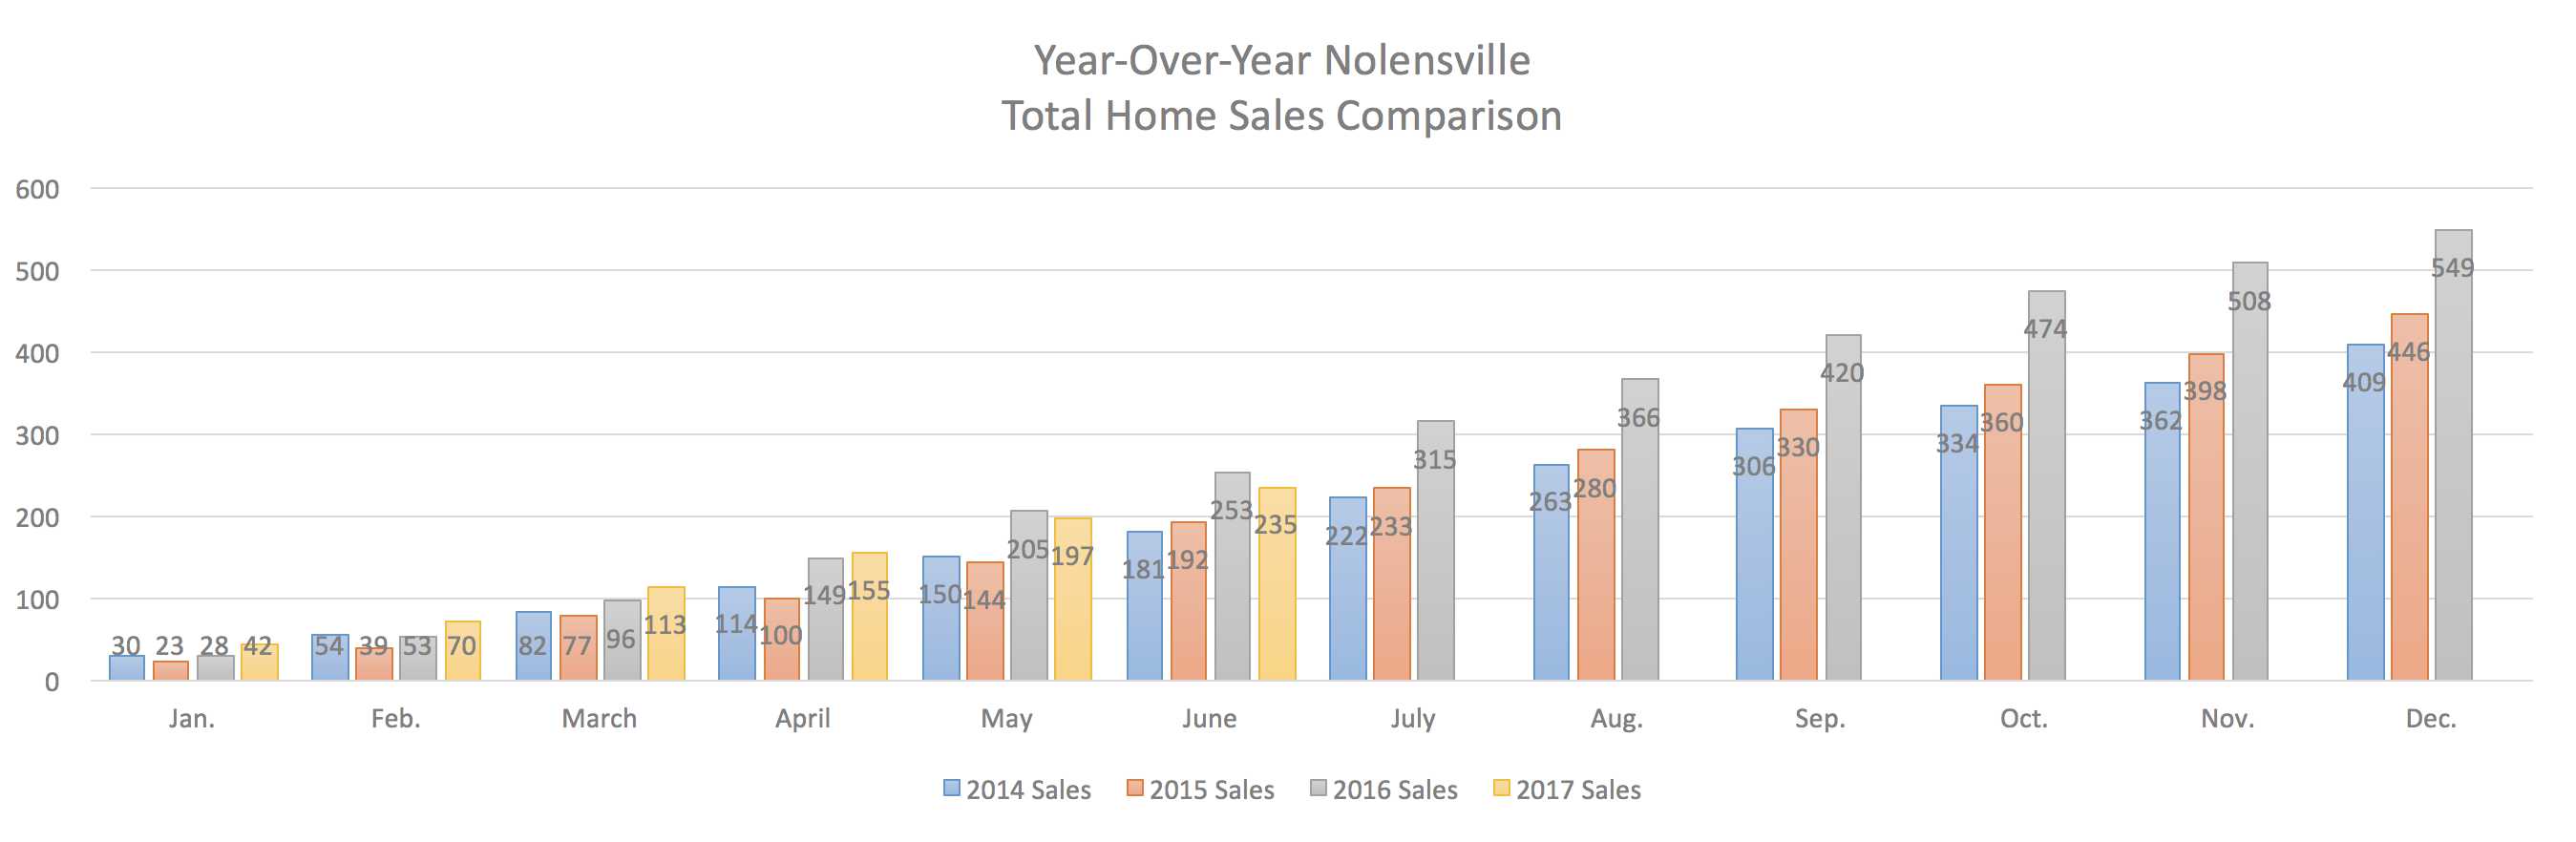 Nolensville Year-Over-Year Home Sales Through June 2017